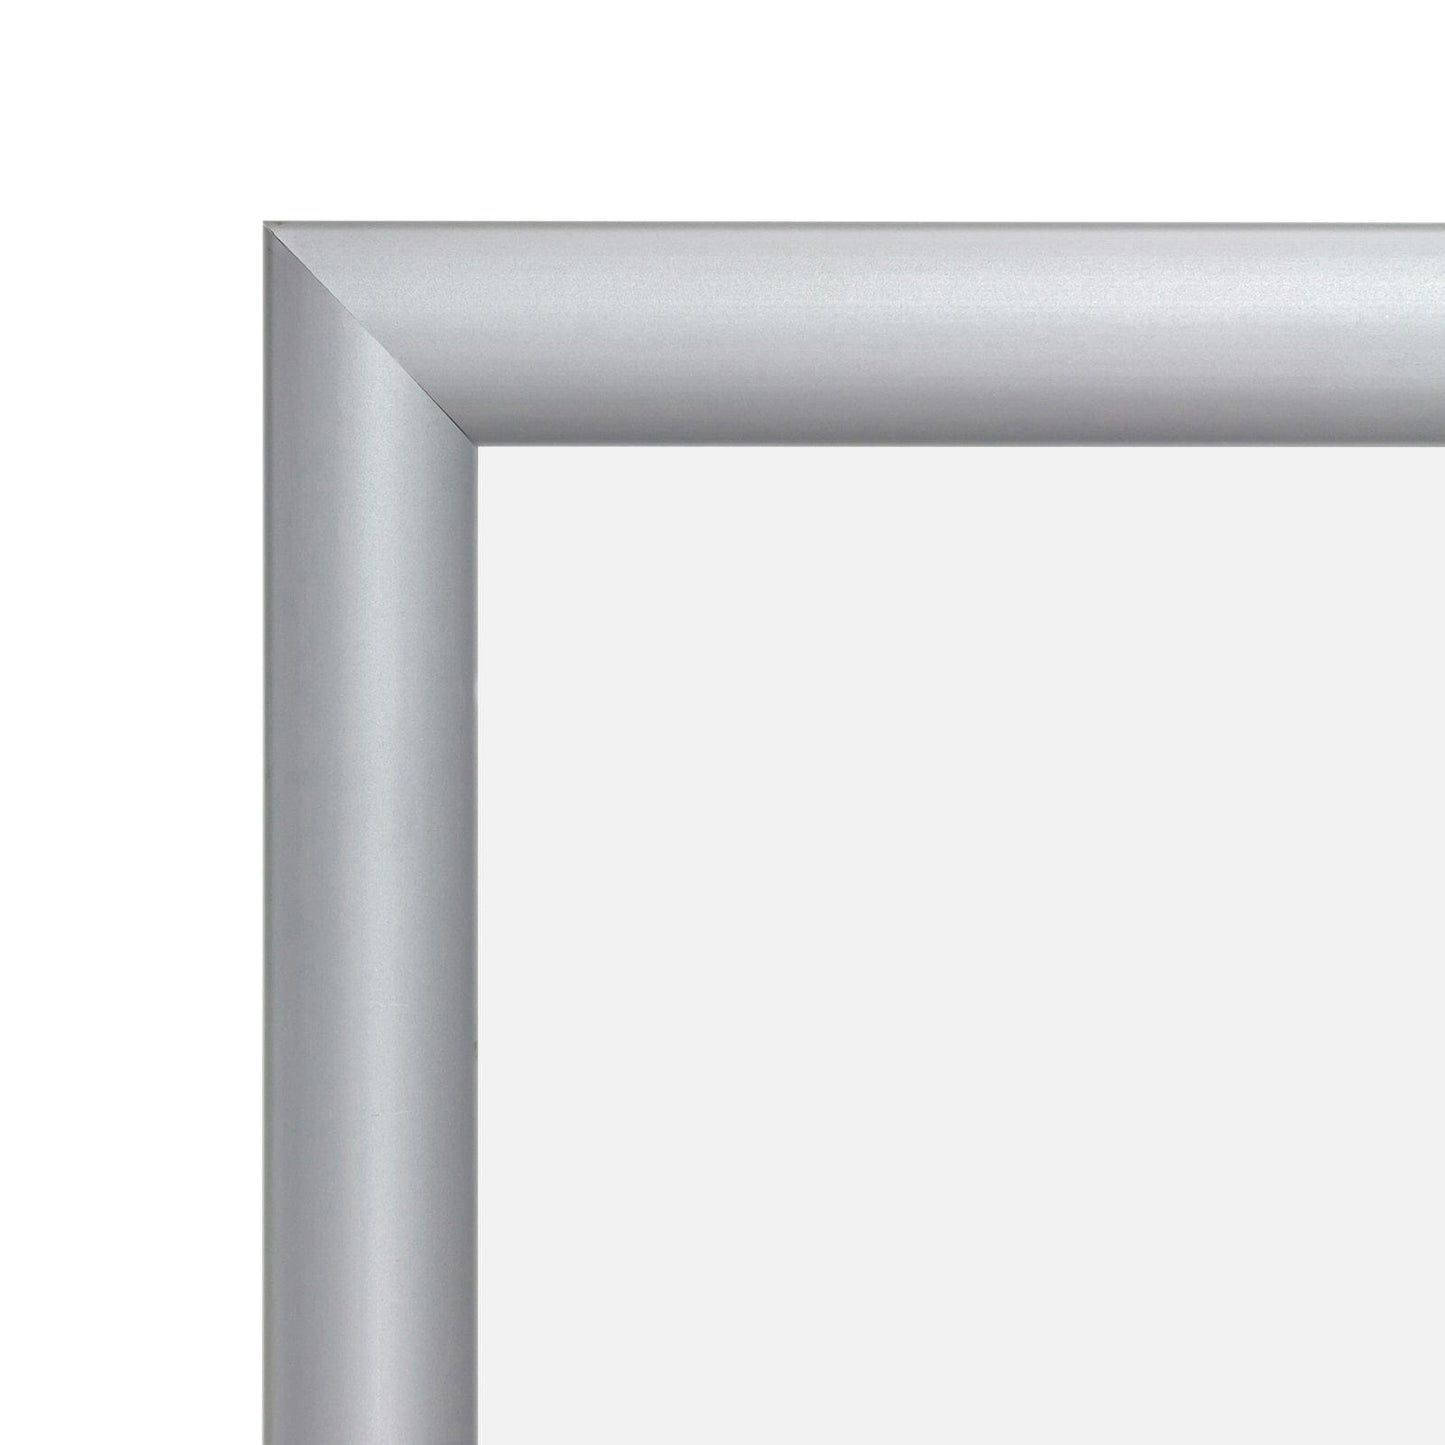 22x34 Silver SnapeZo® Snap Frame - 1.2" Profile - Snap Frames Direct